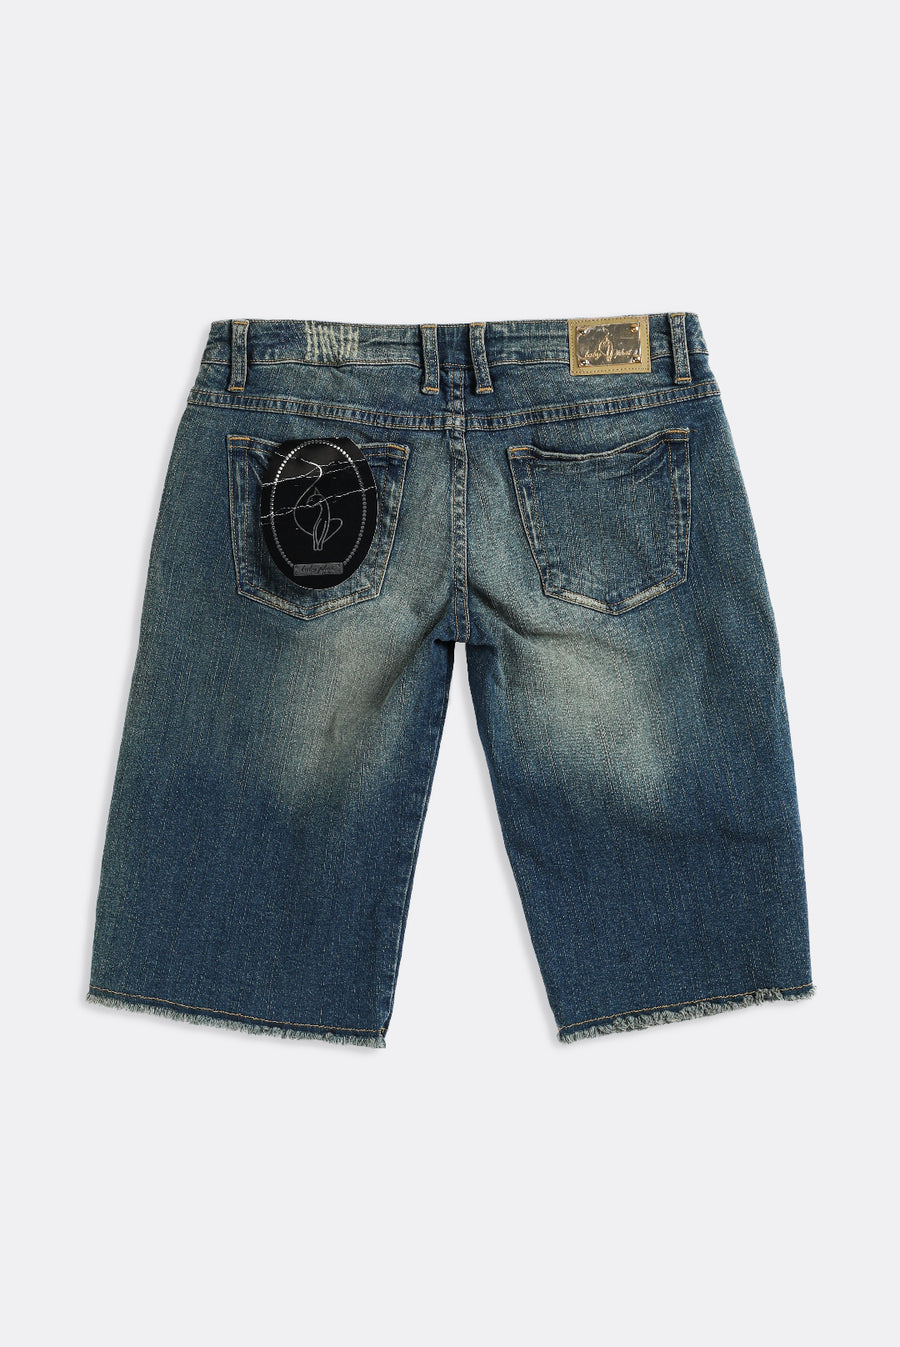 Deadstock Baby Phat Bedazzled Denim Shorts - W31, W33